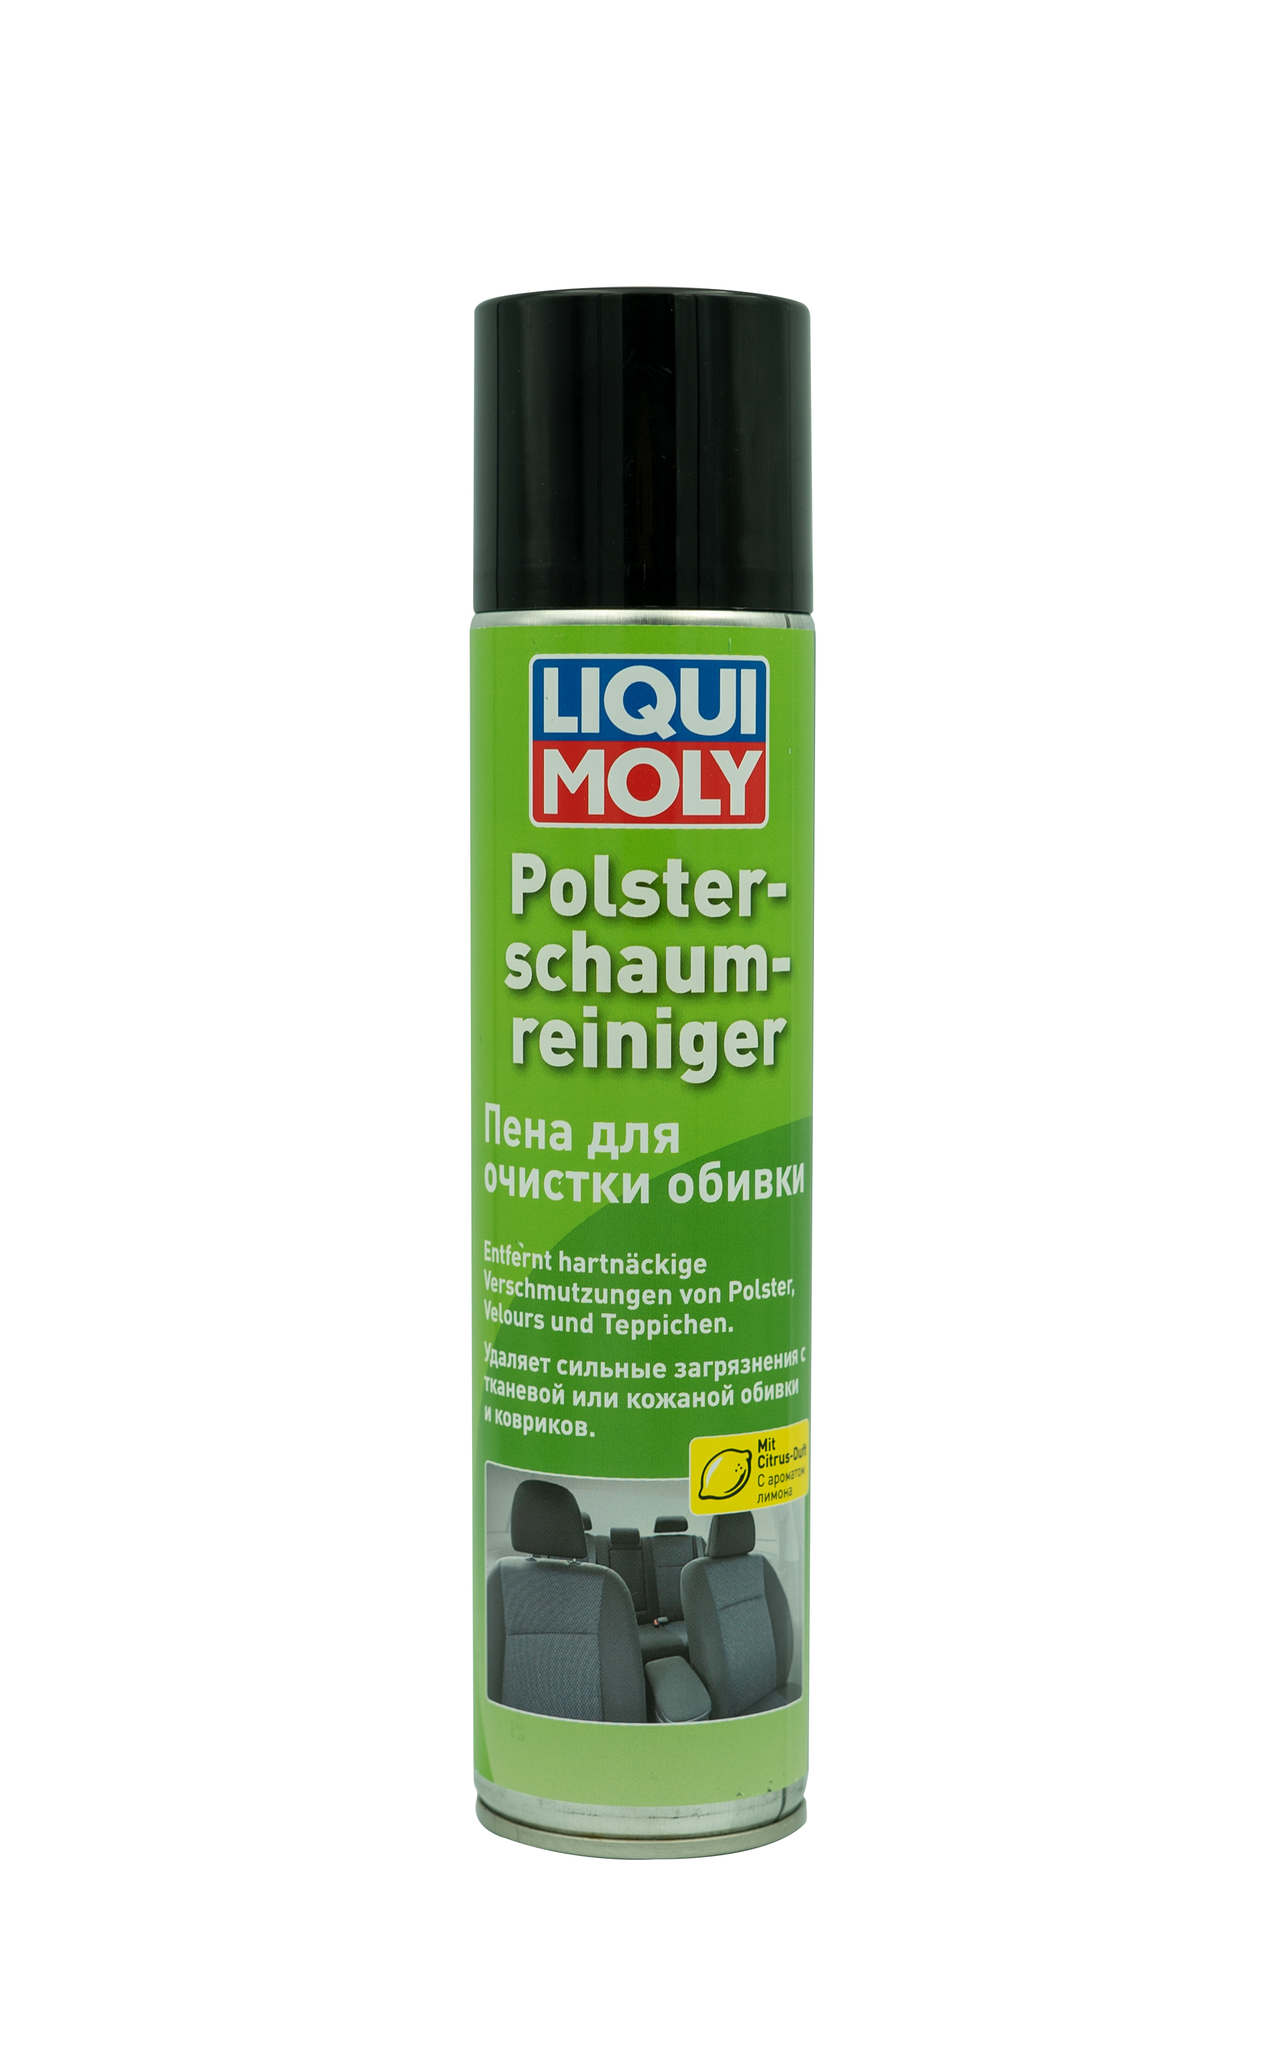 Liqui Moly Polster Schaum Reiniger Пена для очистки обивки